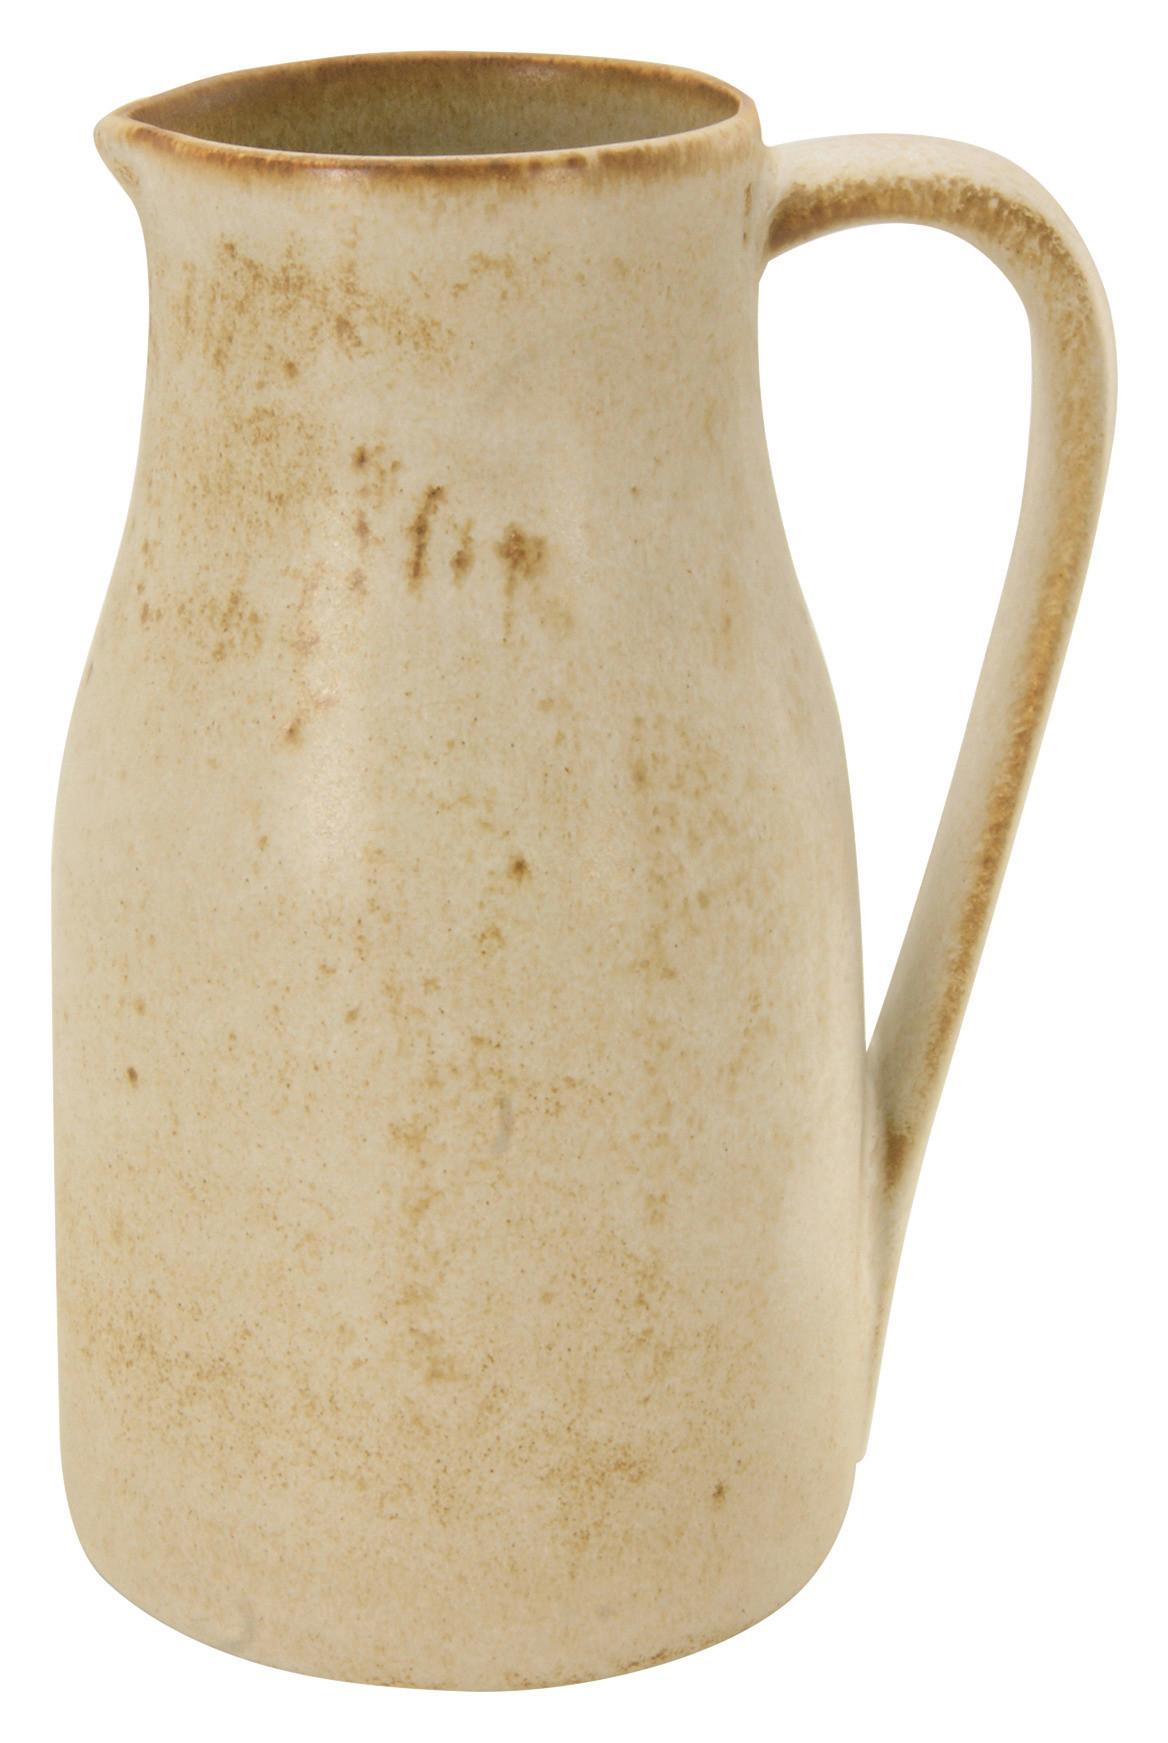 Krug Sahara aus Keramik ca. 400ml - Weiß, LIFESTYLE, Keramik (11,5/9/13,5cm) - Zandiara